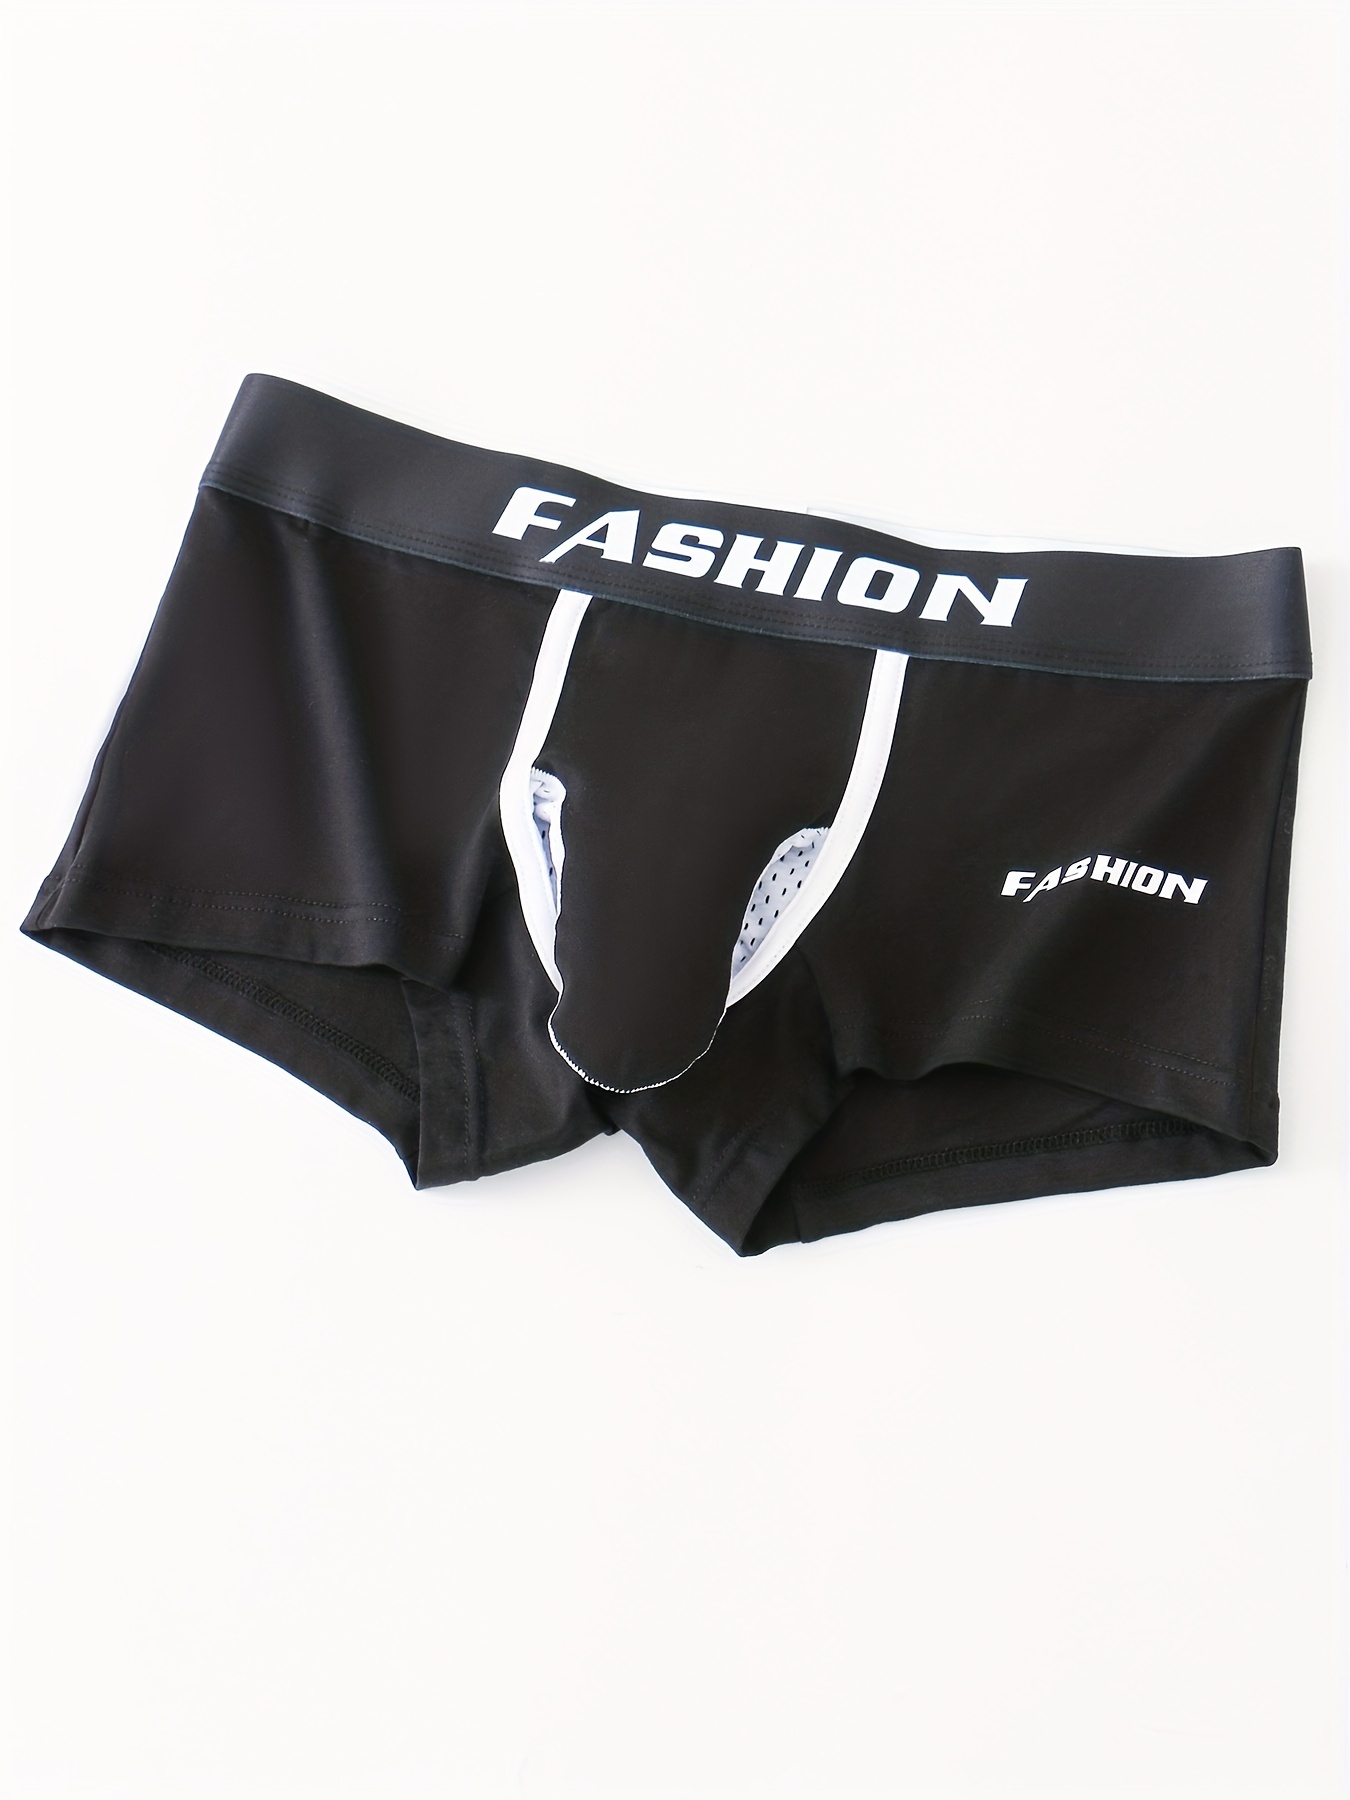 3pcs Snacks Print Men's Boxer Briefs Shorts, Breathable Comfy Long Boxer  Trunks, Men's Novelty Funny Underwear